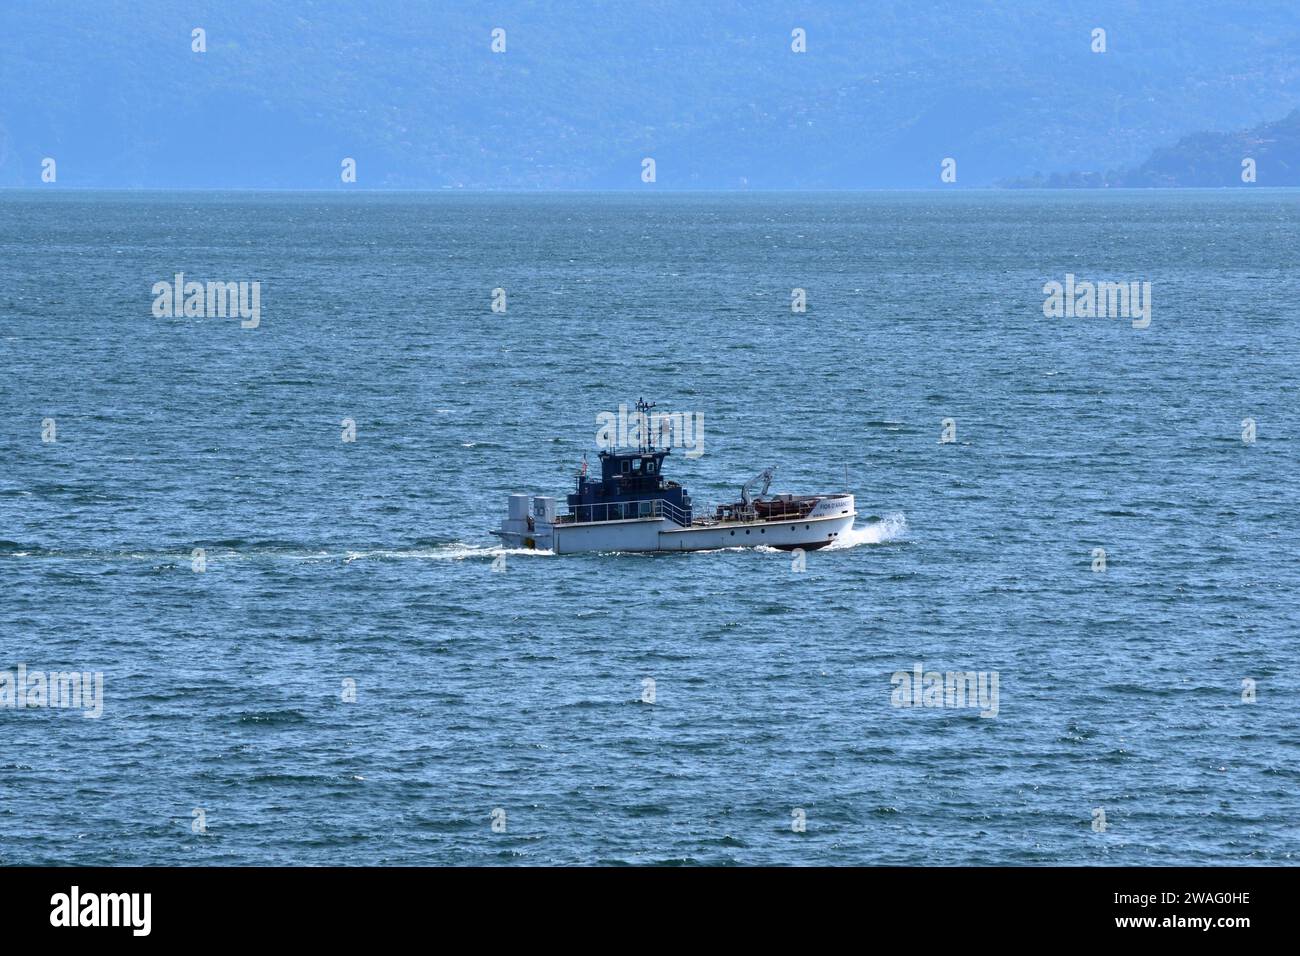 Fior D'Arancio III, a small commercial vessel, is seen on Lake Maggiore, Italy. Stock Photo